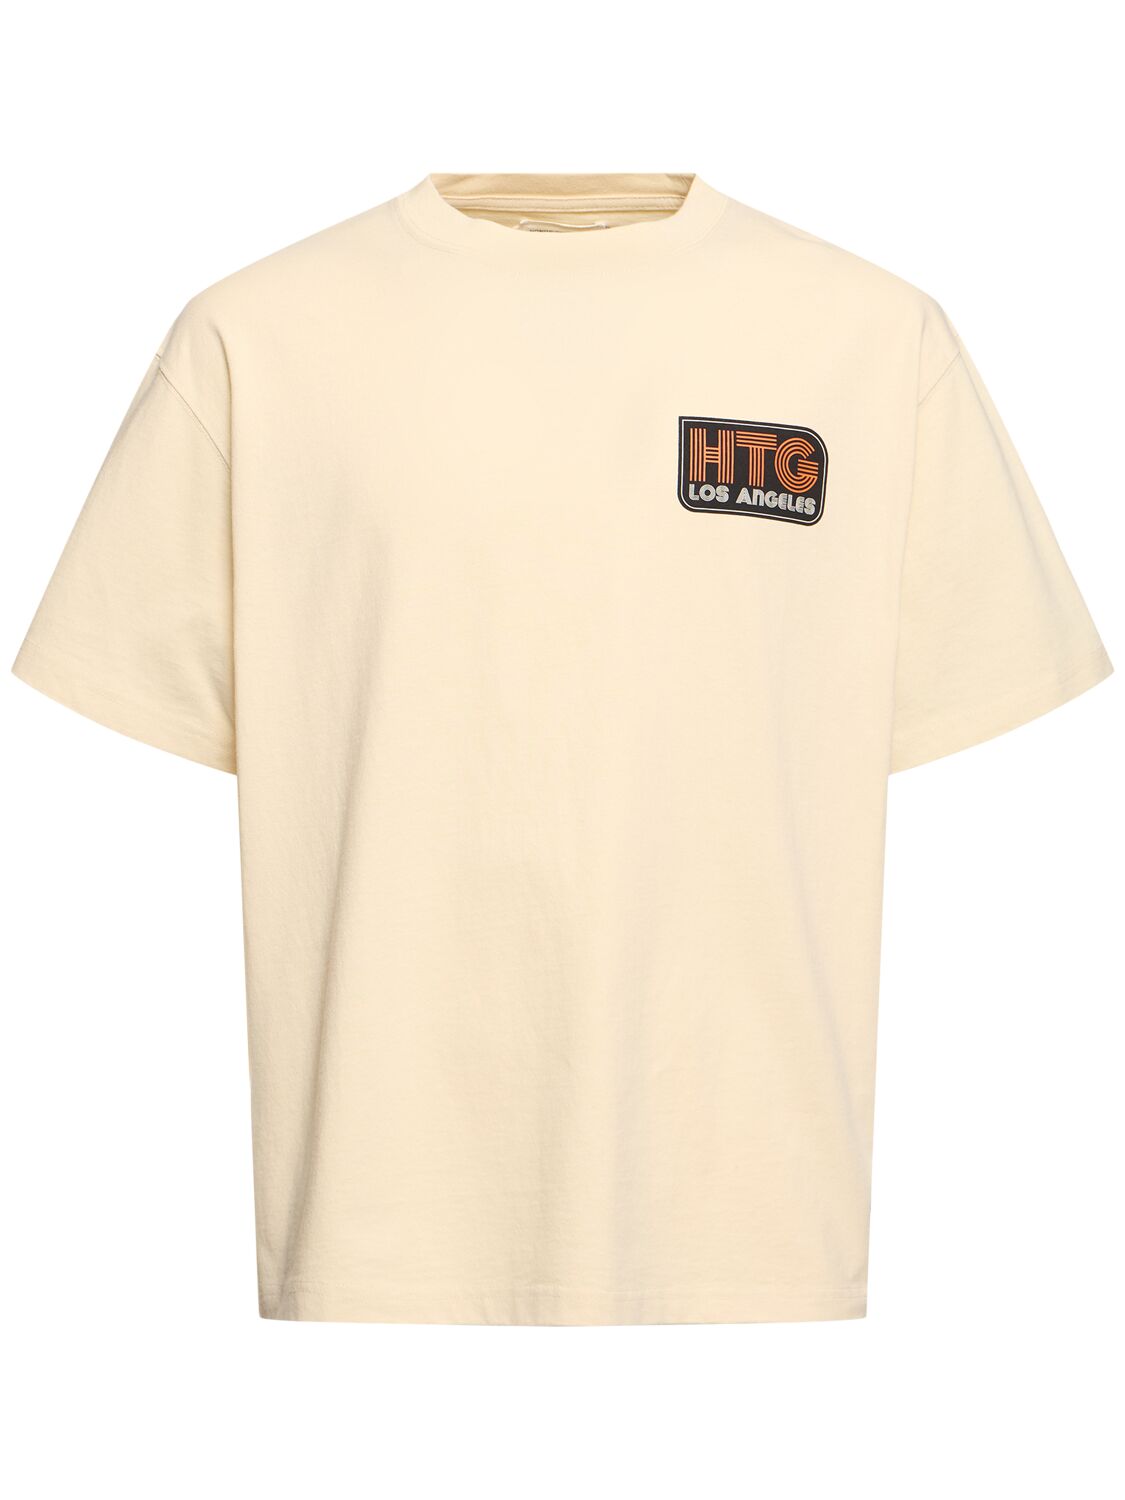 Image of Htg Los Angeles Short Sleeve T-shirt